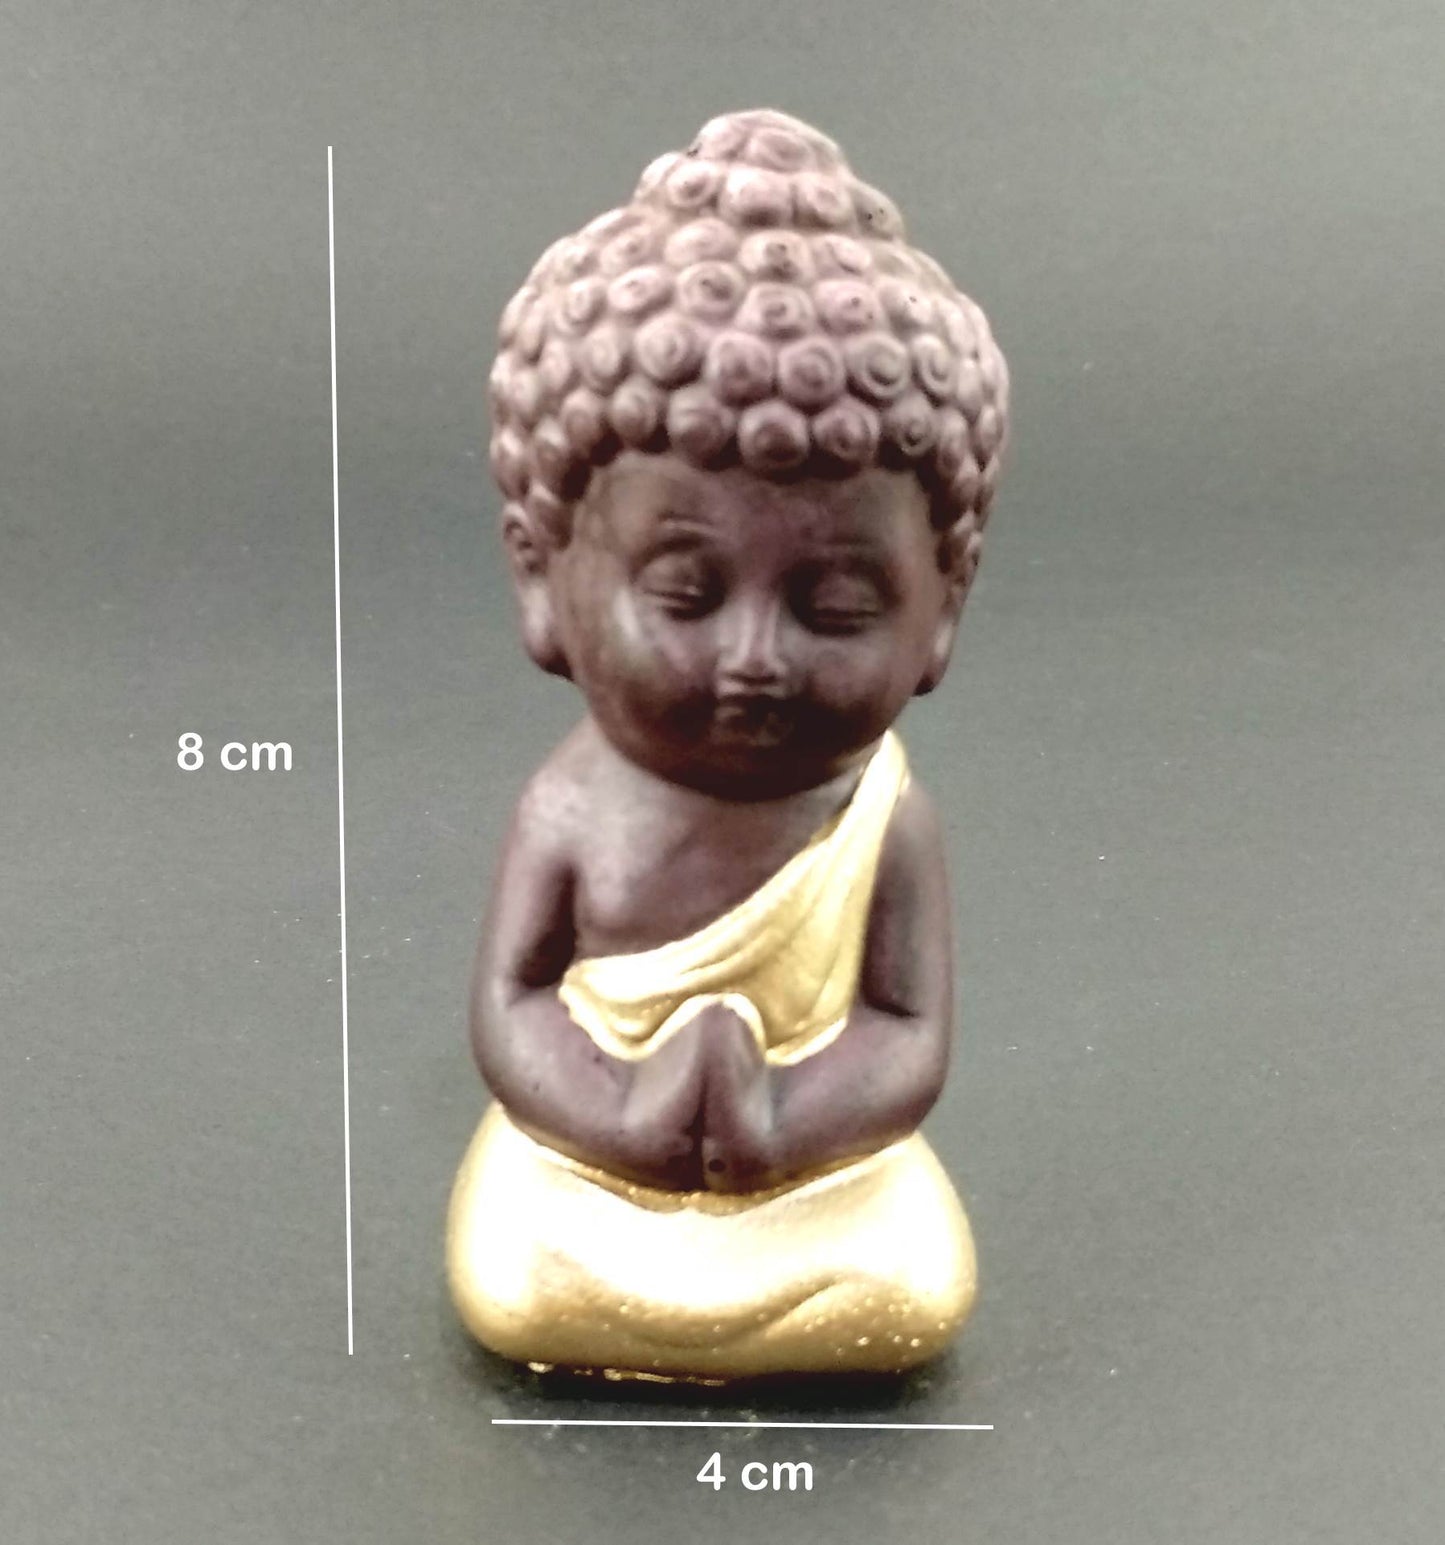 Brown Base Set of 2 Miniature Buddha Golden and Blue - Deczo